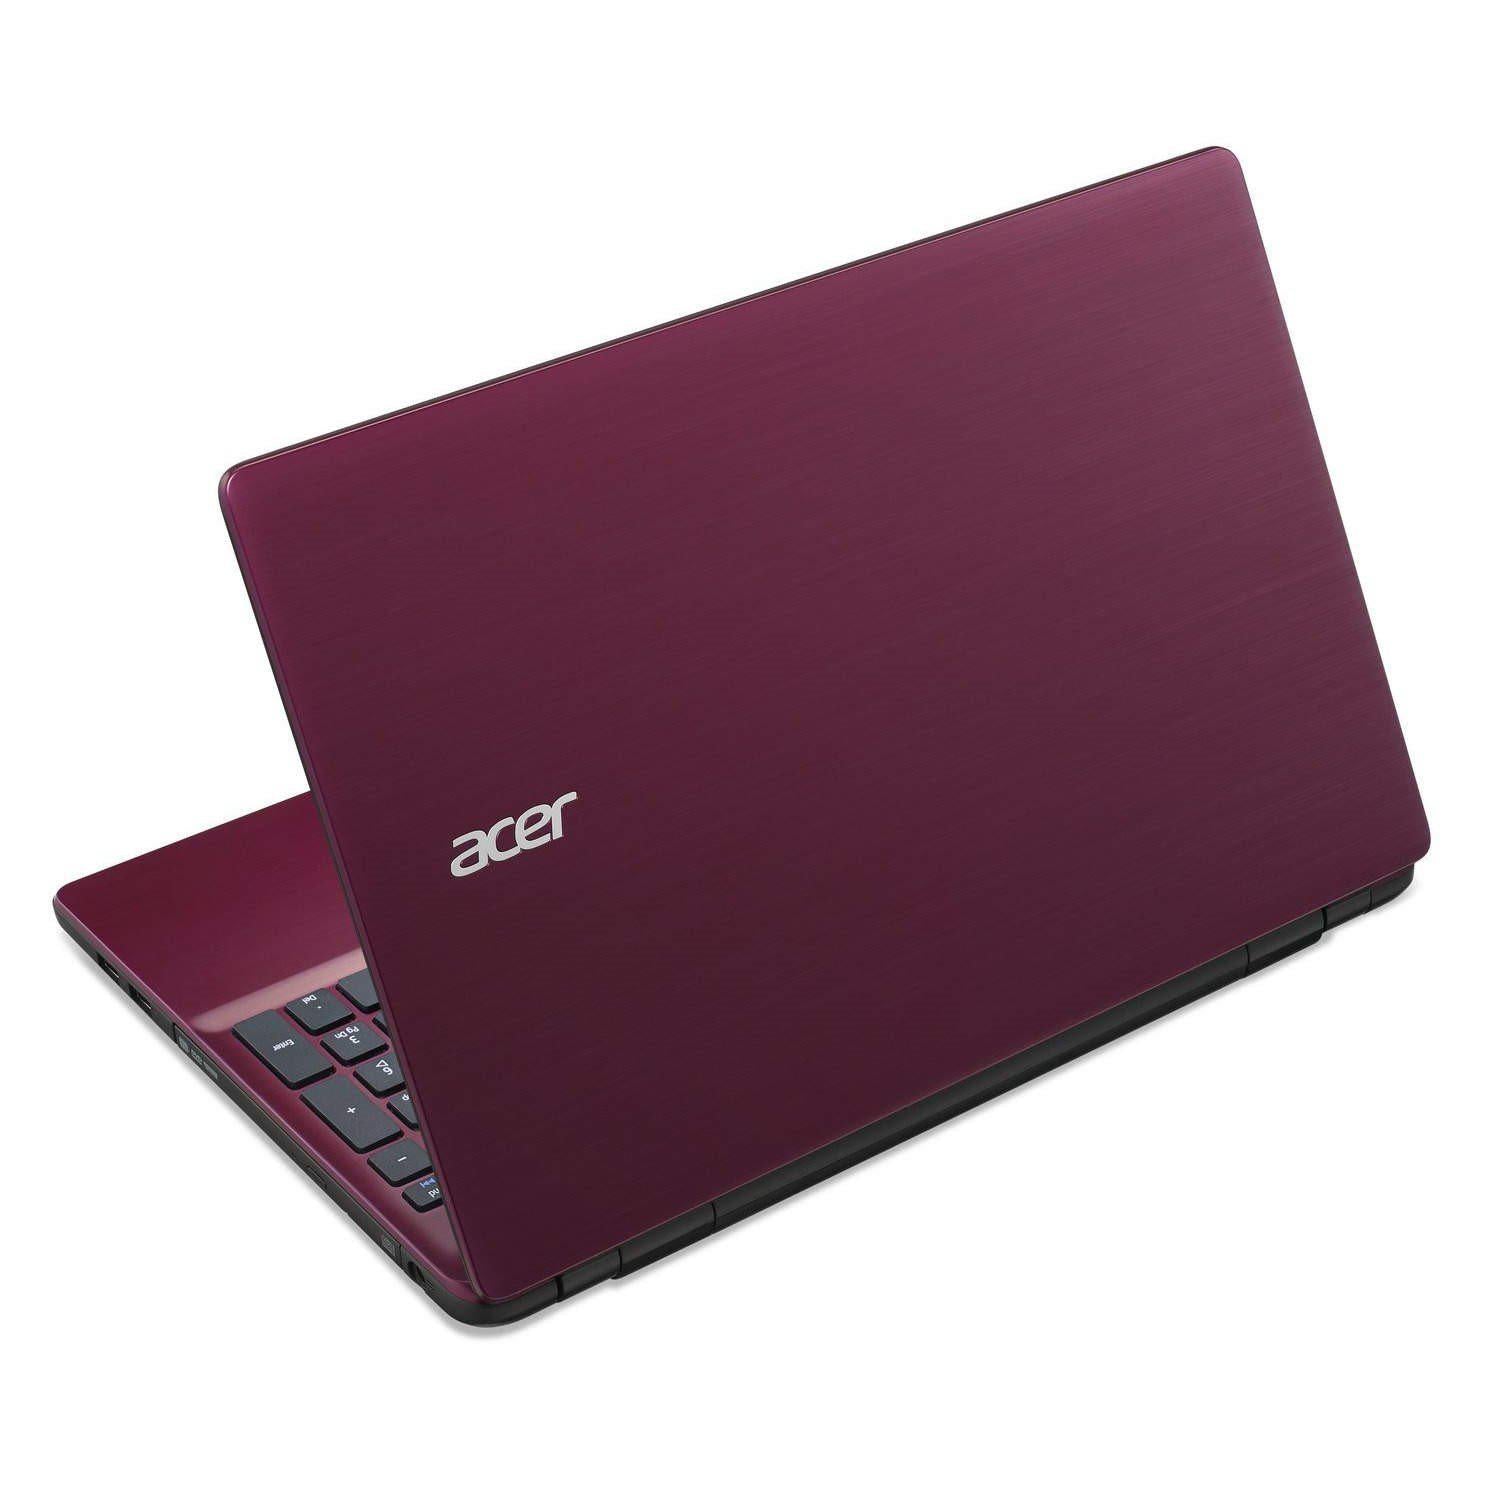 Acer Aspire E5-571 - Intel Core i5, 4GB RAM, 1TB HDD, 15.6" - Purple